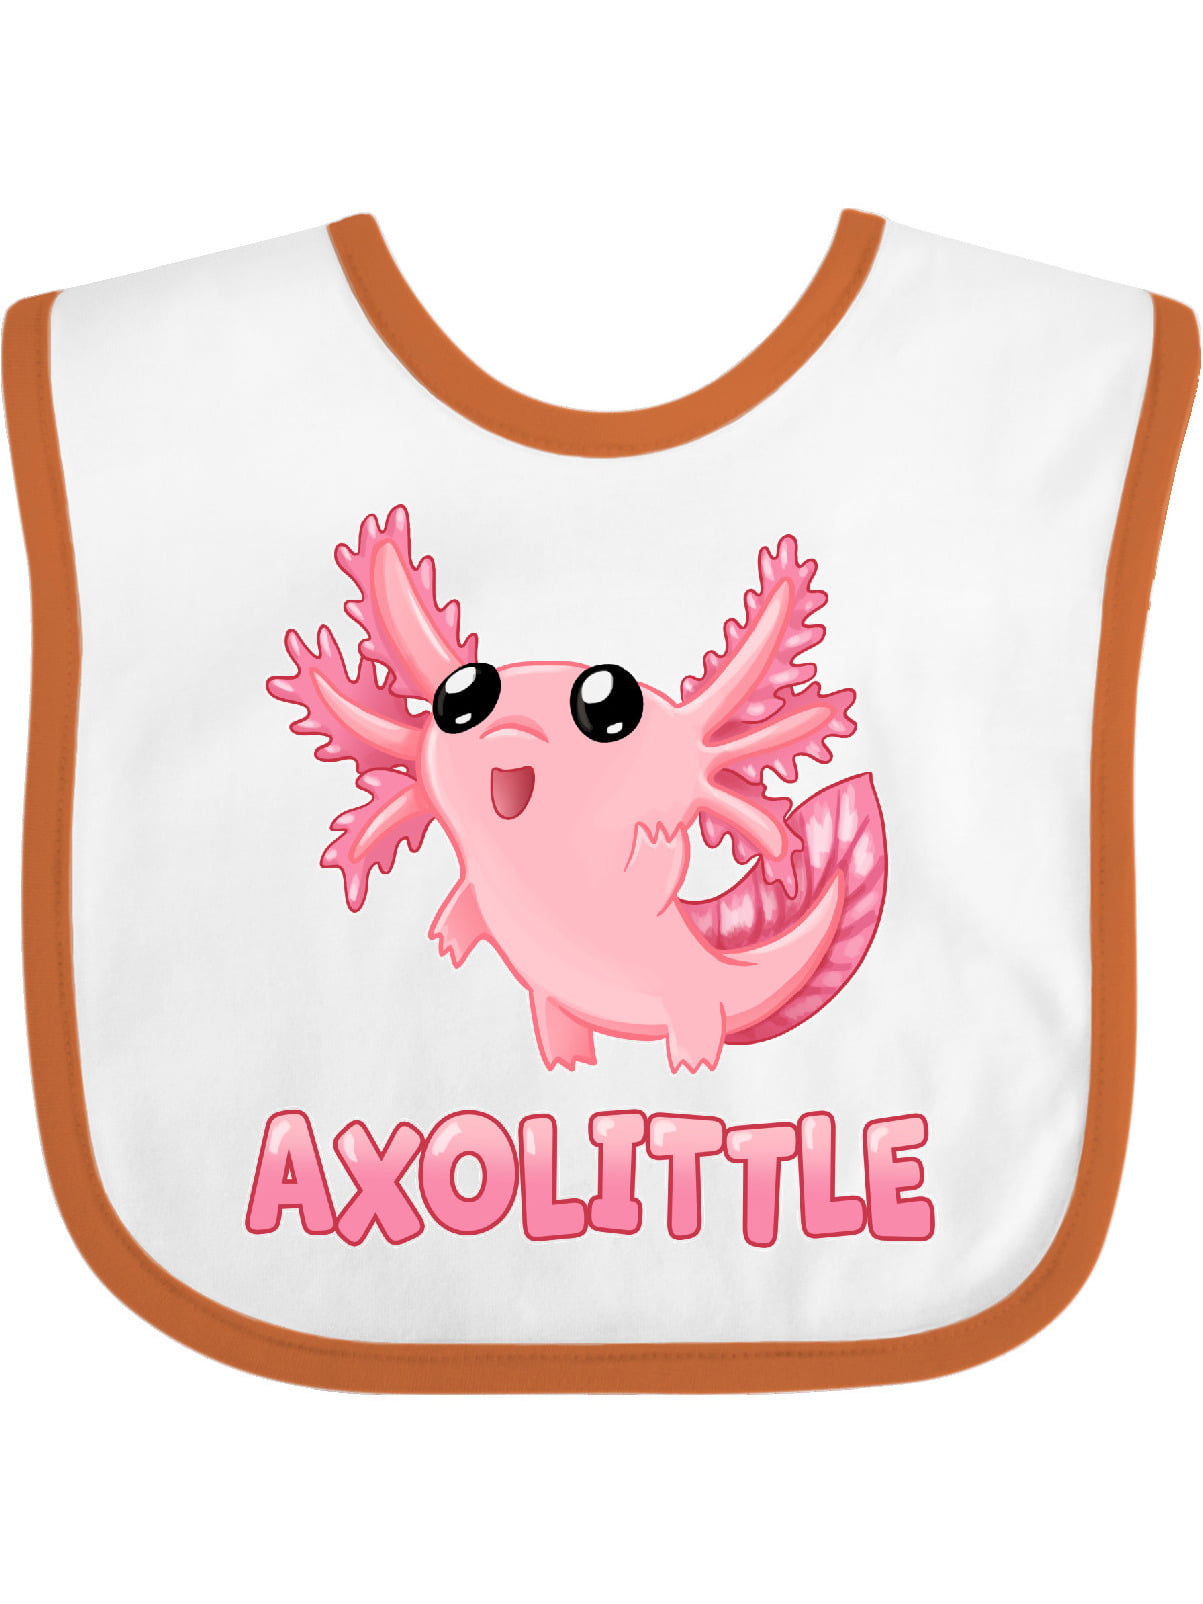 Axolittle Cute Baby Axolotl Baby Bib Walmart Com Walmart Com